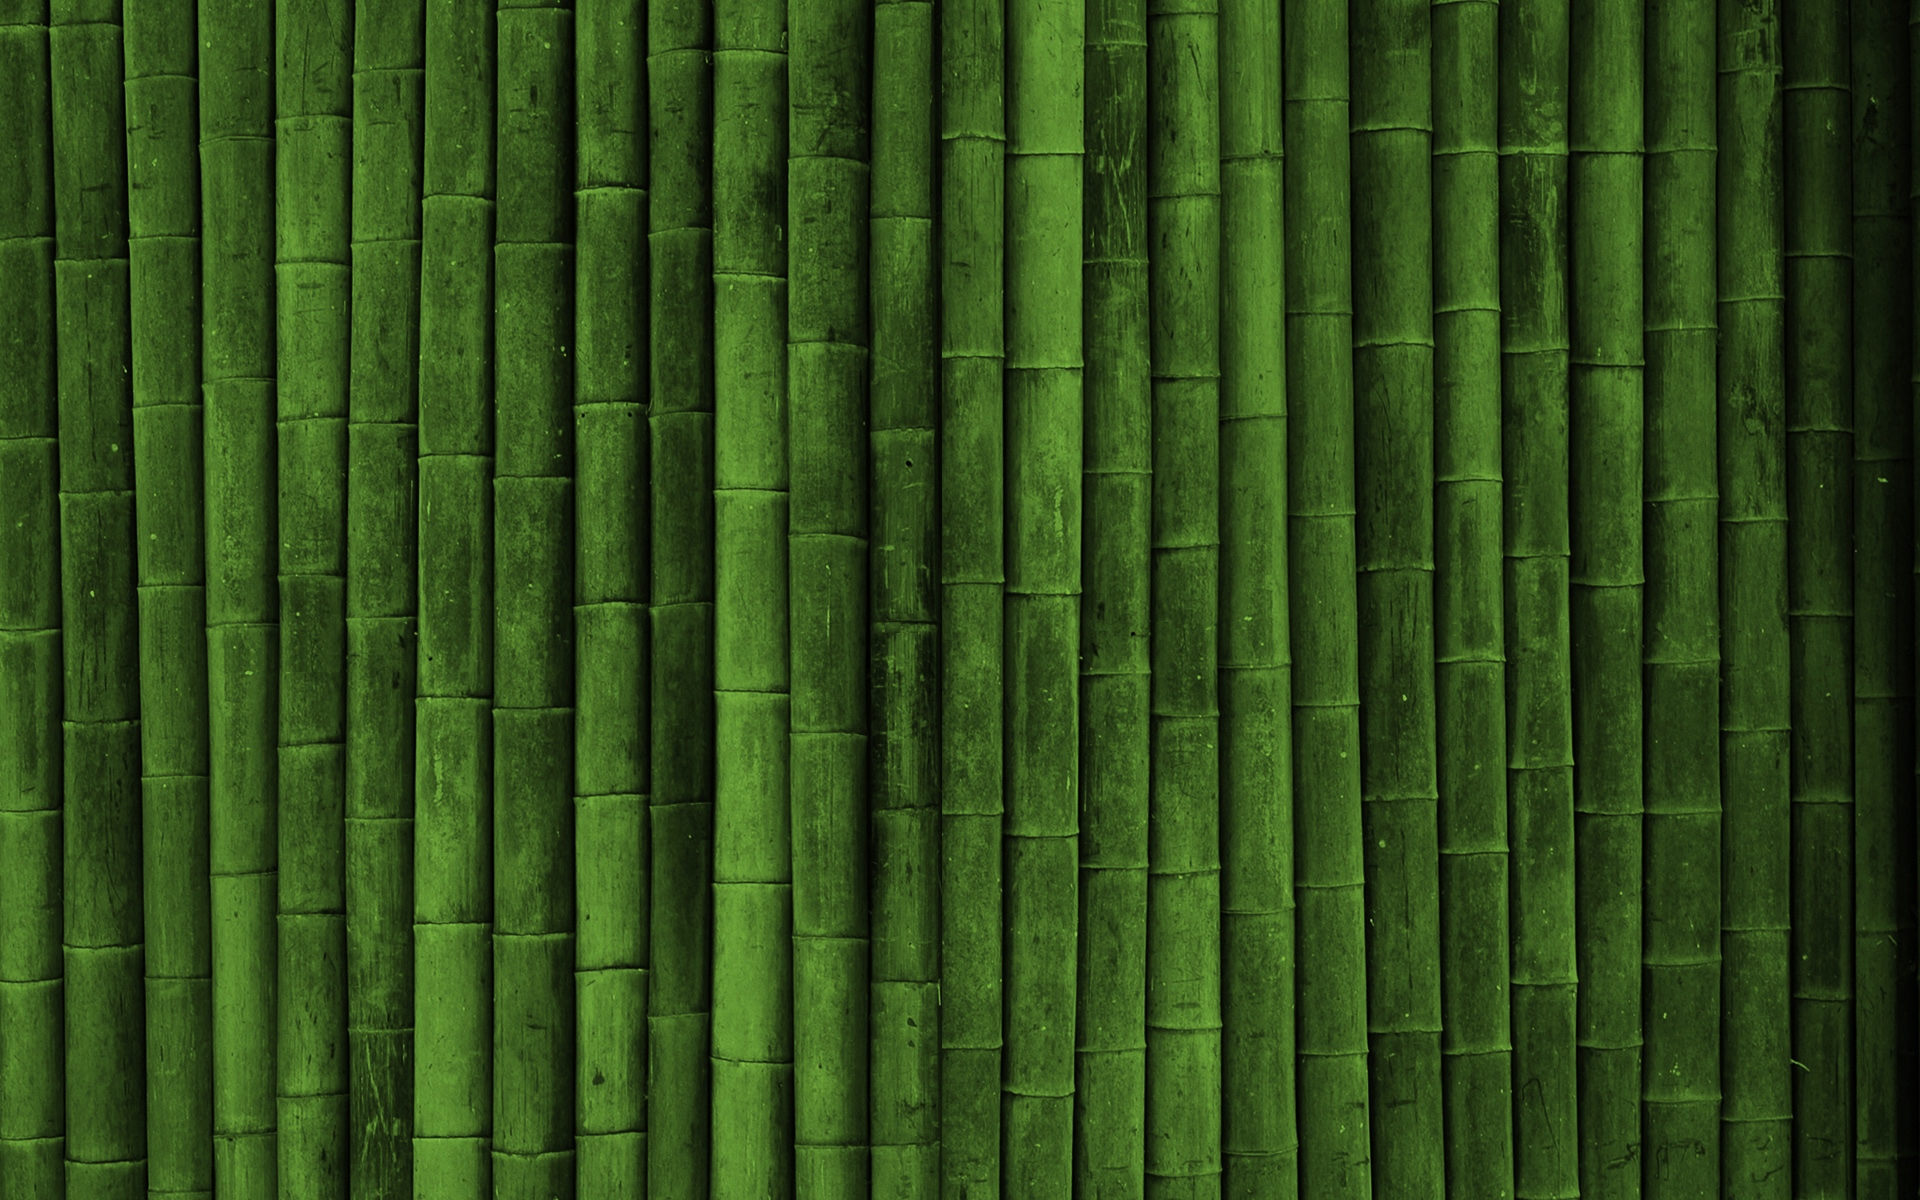 Bamboo